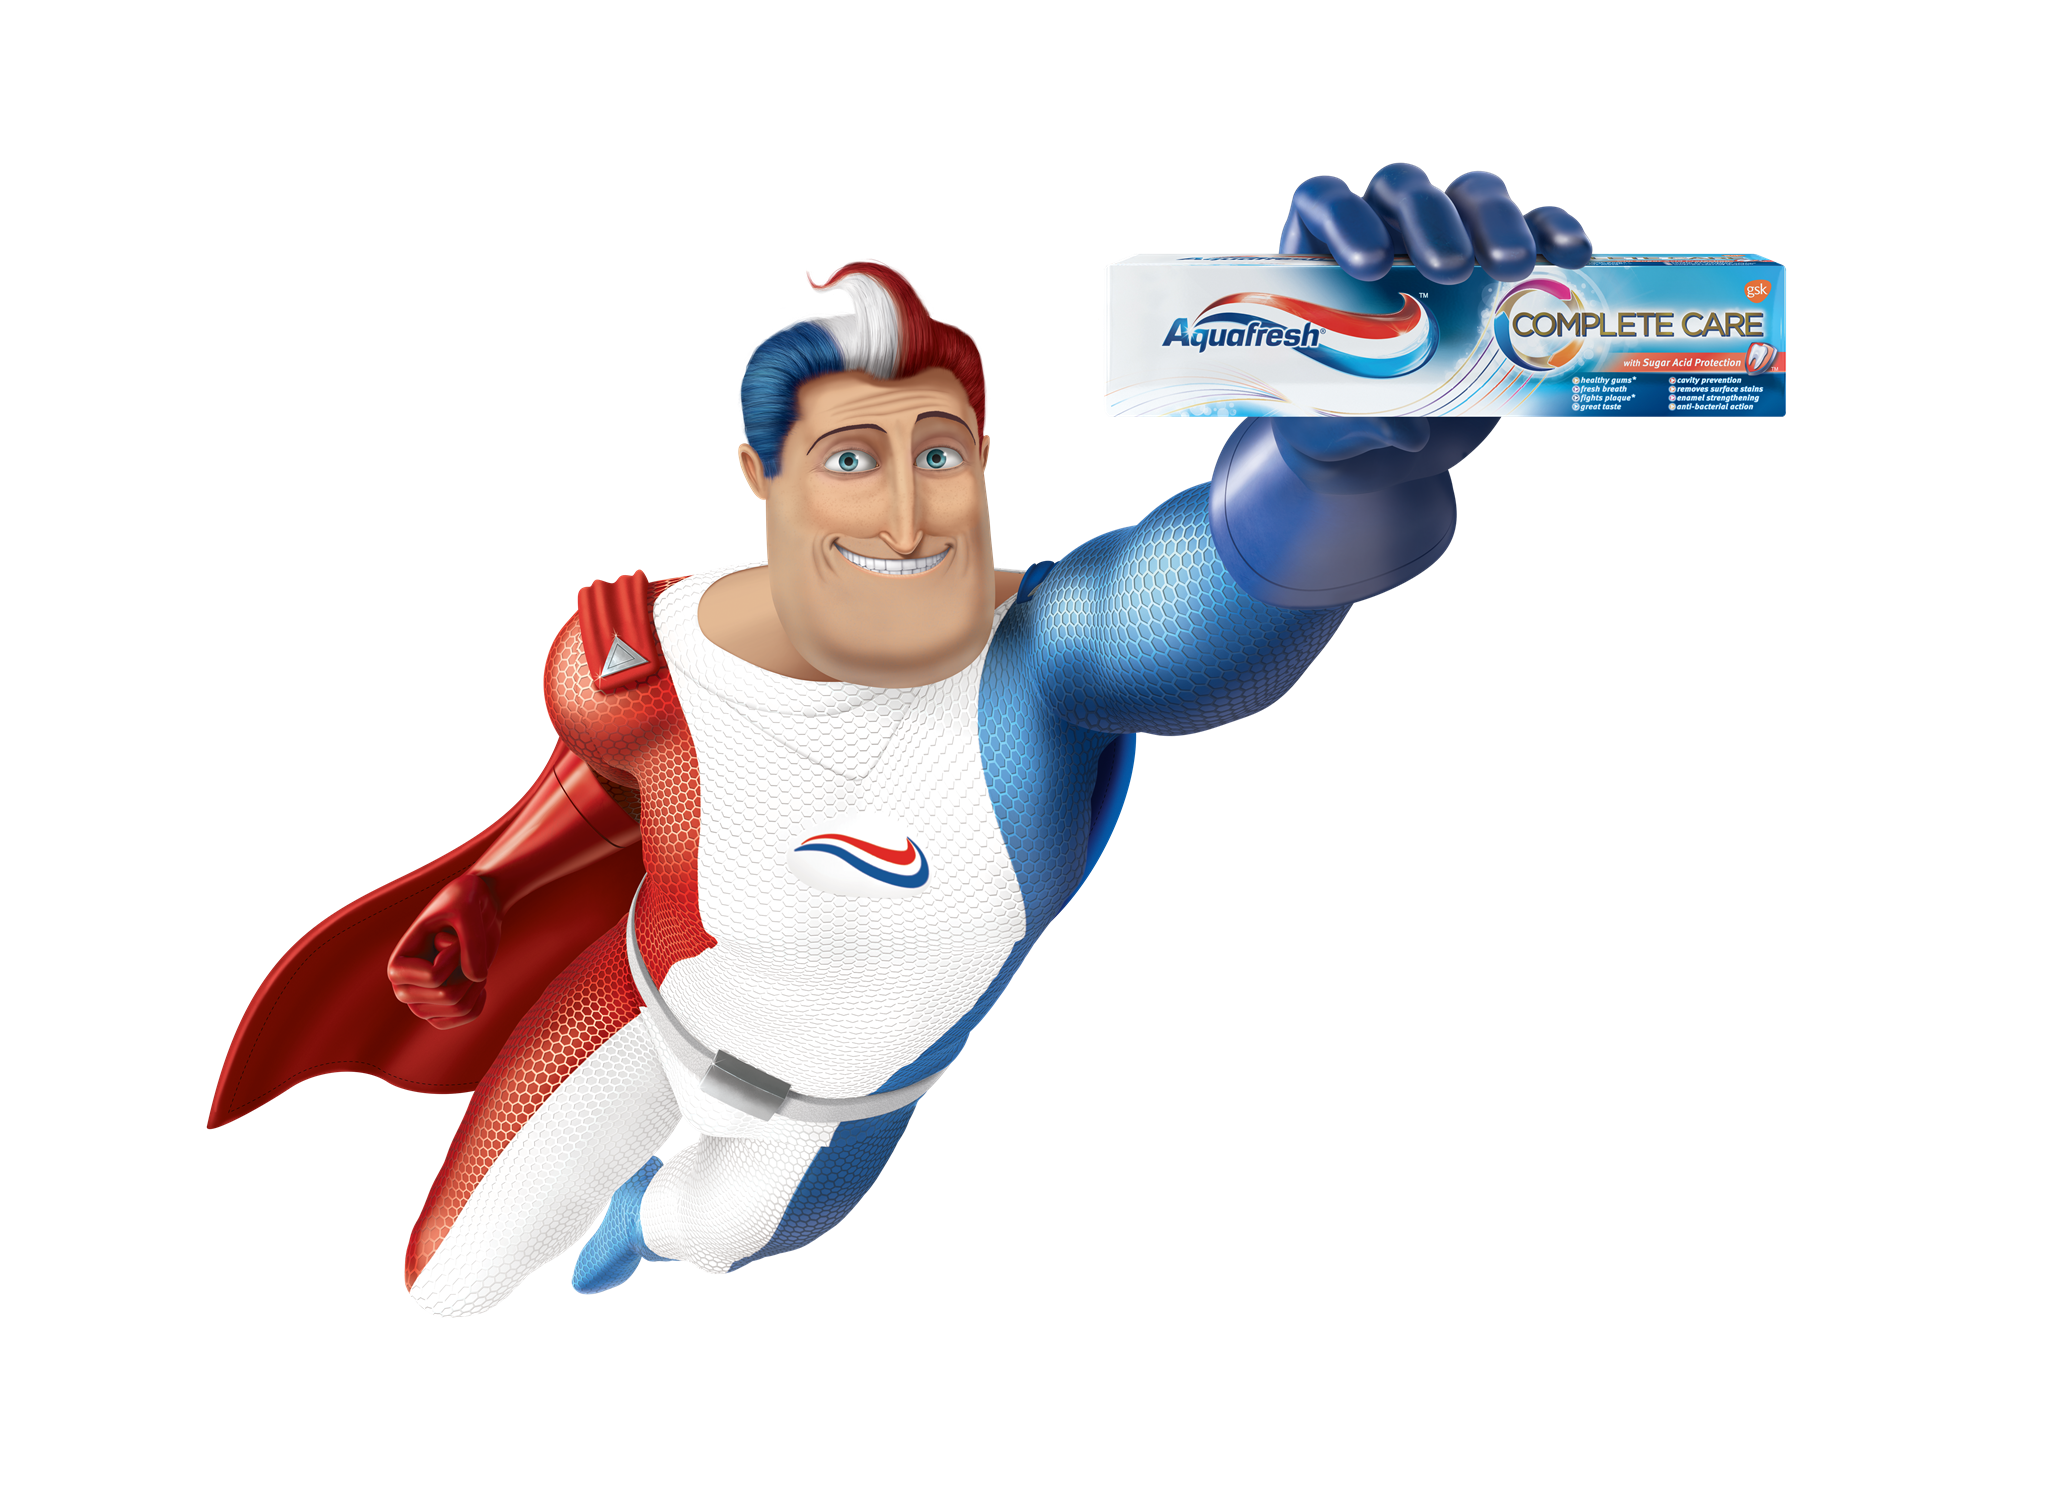 Aquafresh is launching a new superhero, Captain Aquafresh, as part of a €500k integrated marketing campaign